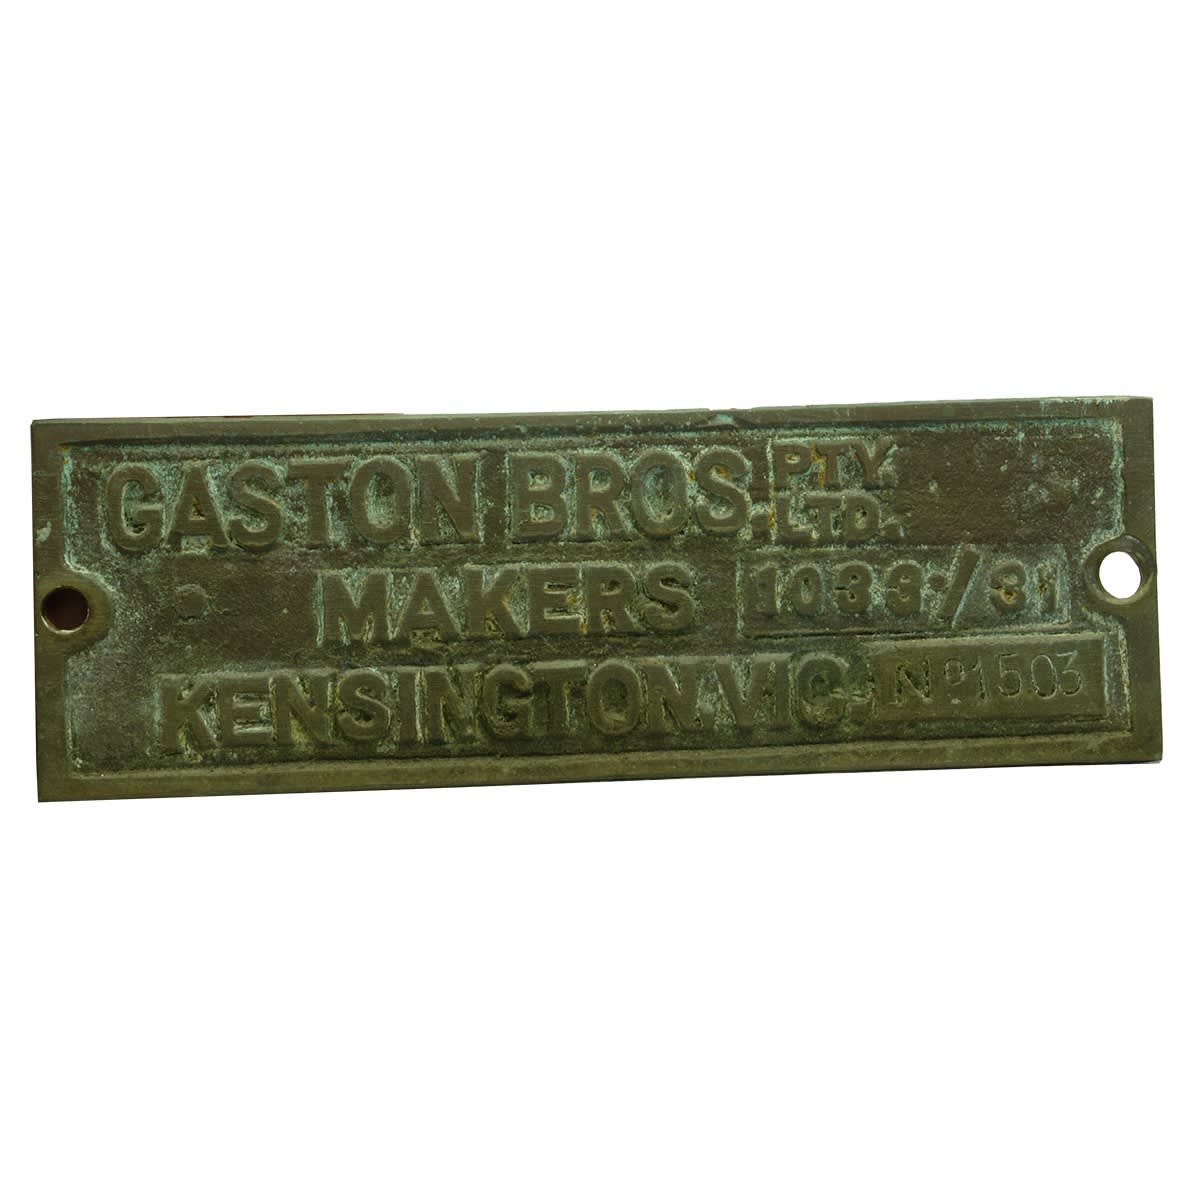 Brass Name Plate. Gaston Bros Pty Ltd Makers Kensington. (Victoria)